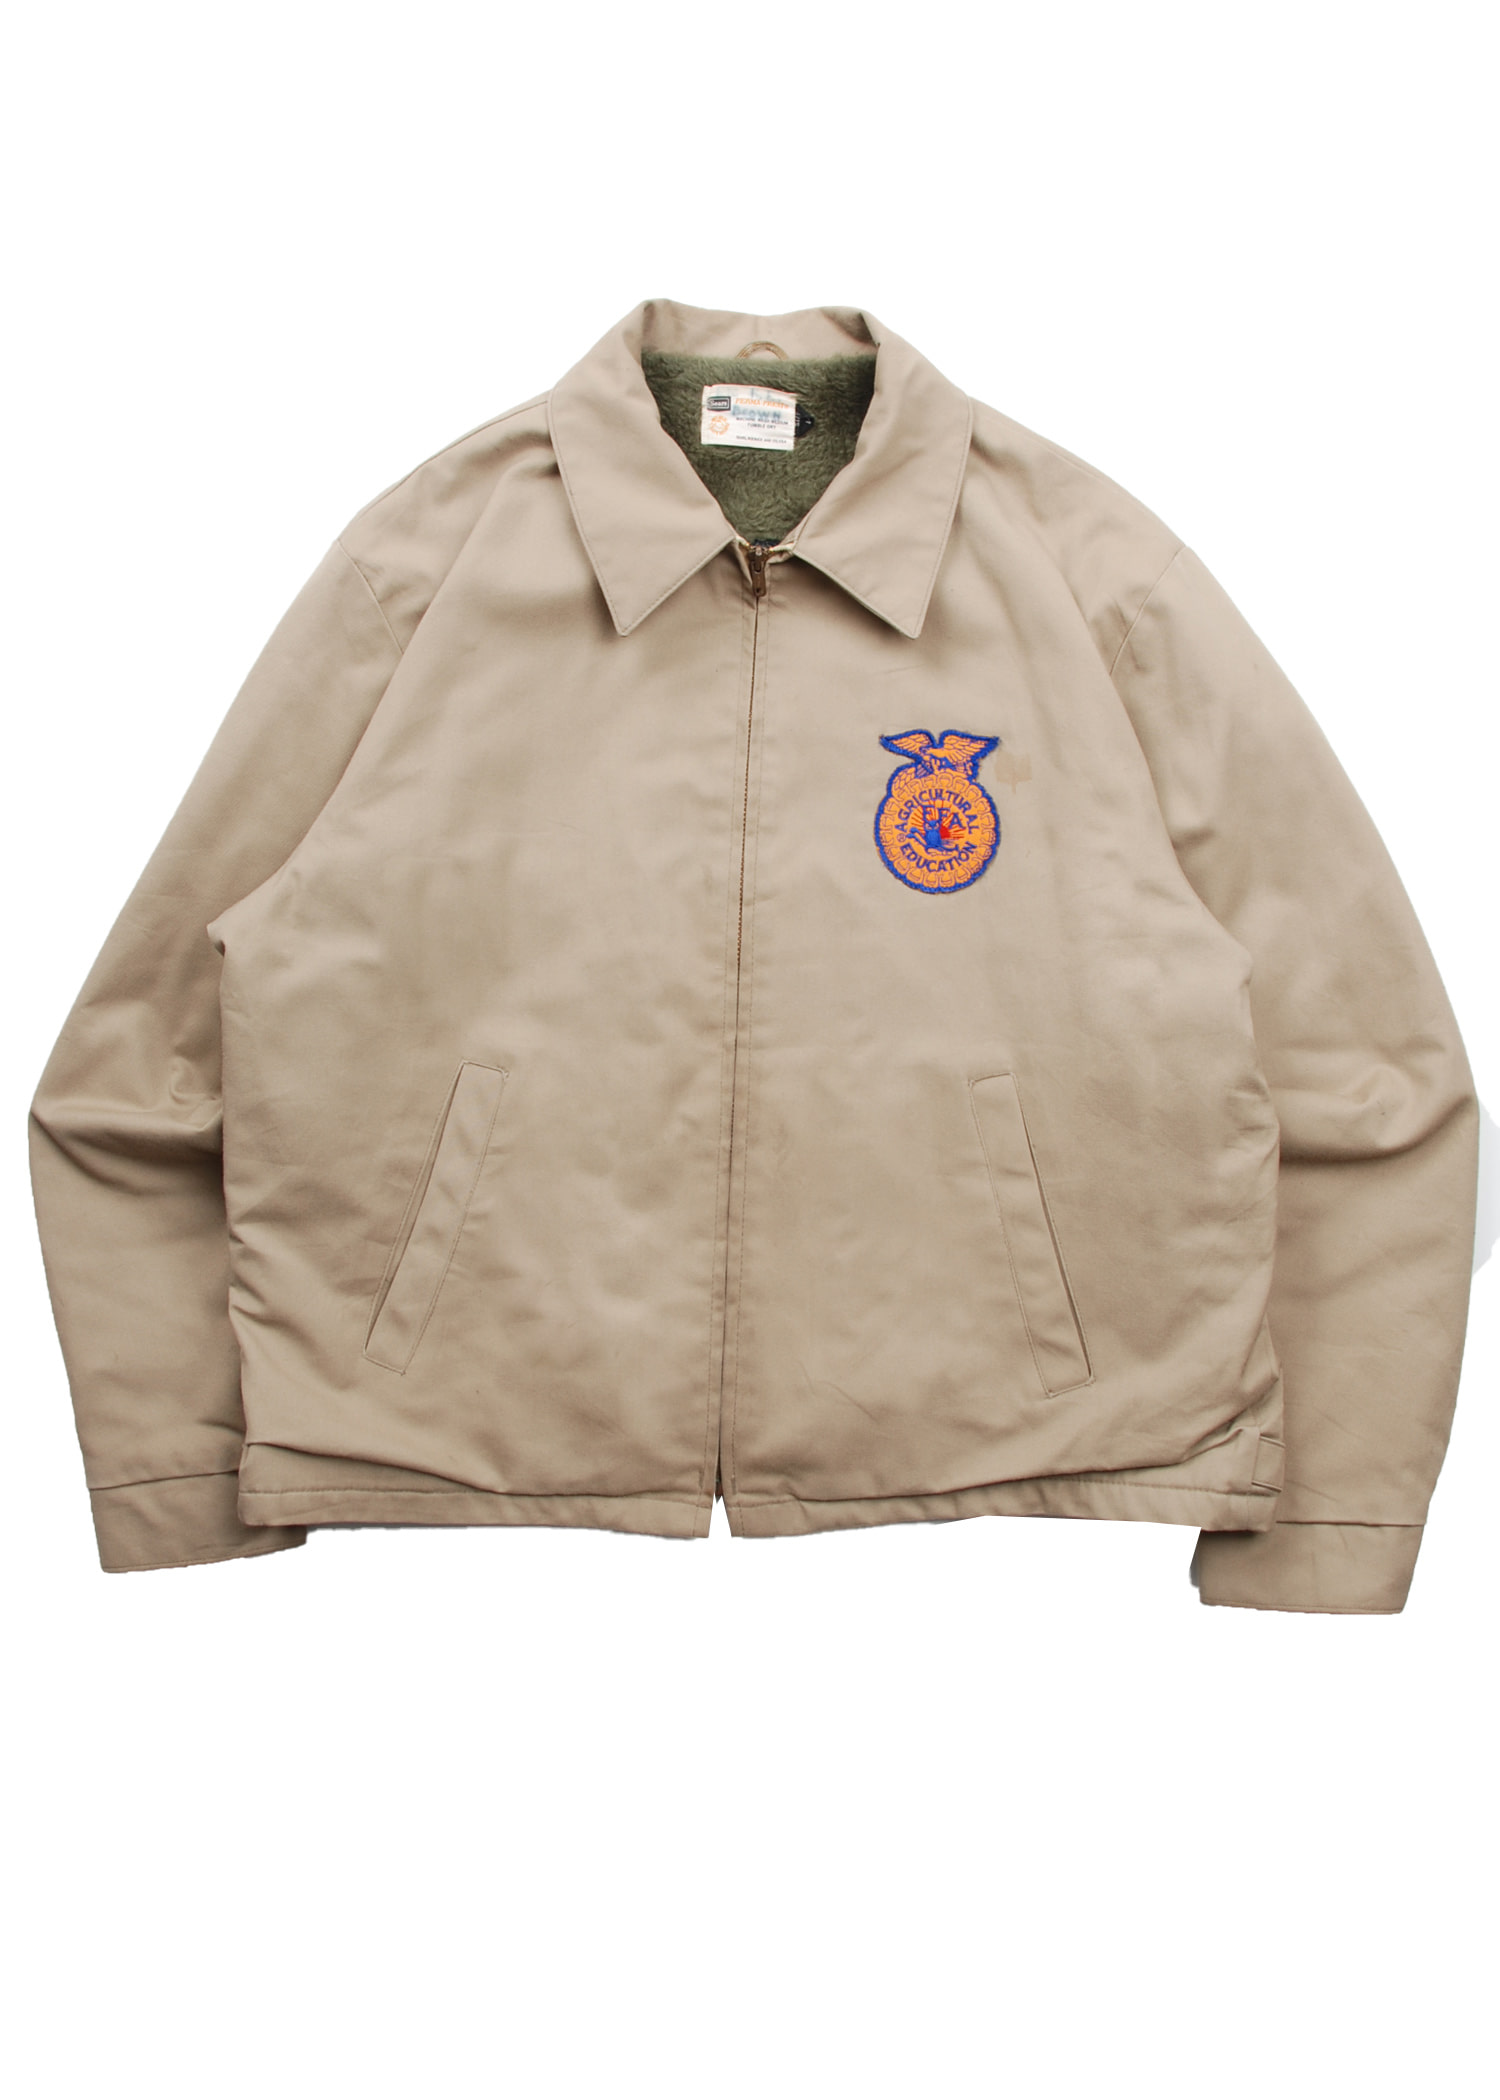 Sears FFA jacket